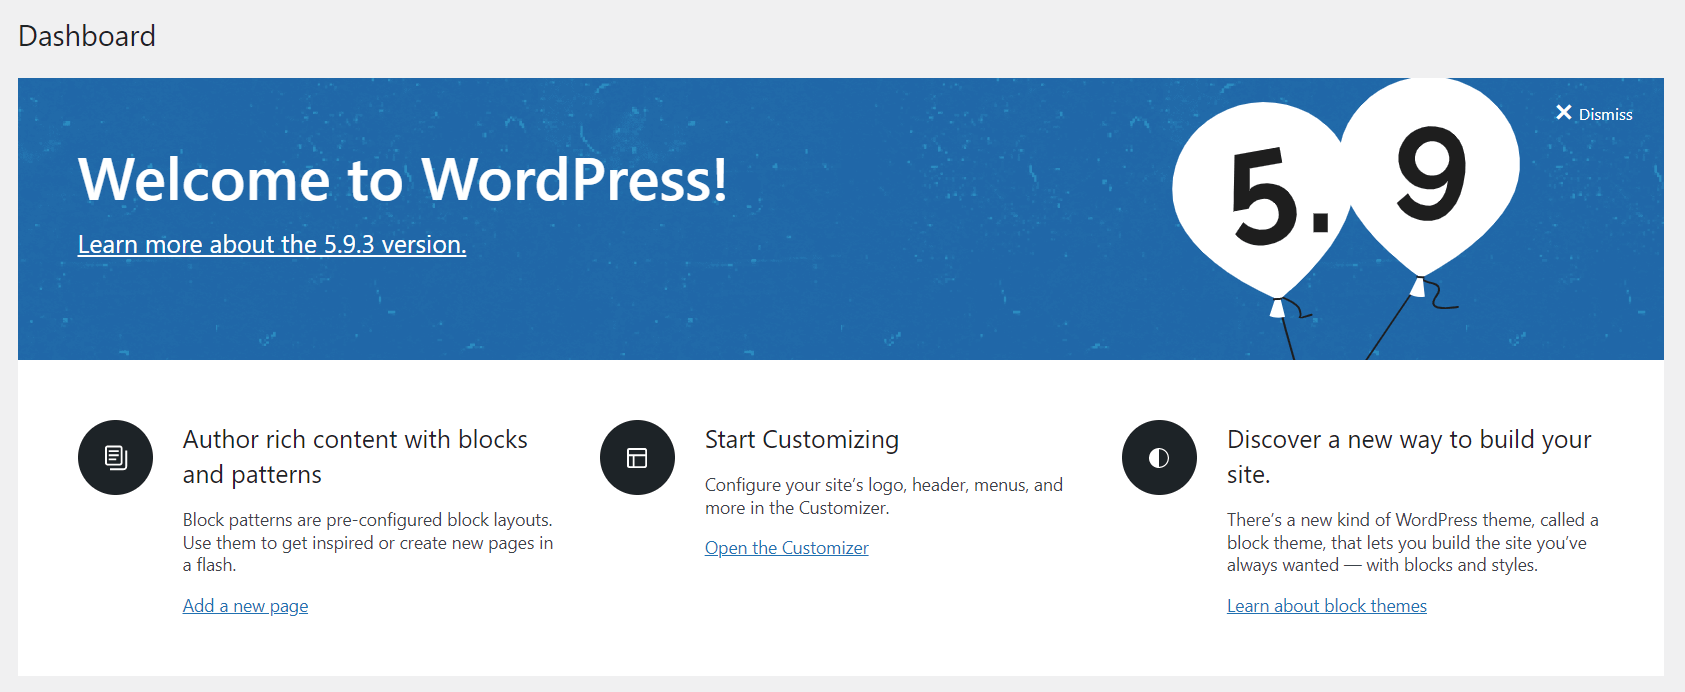 pfo-wordpress-dashboard-welcome